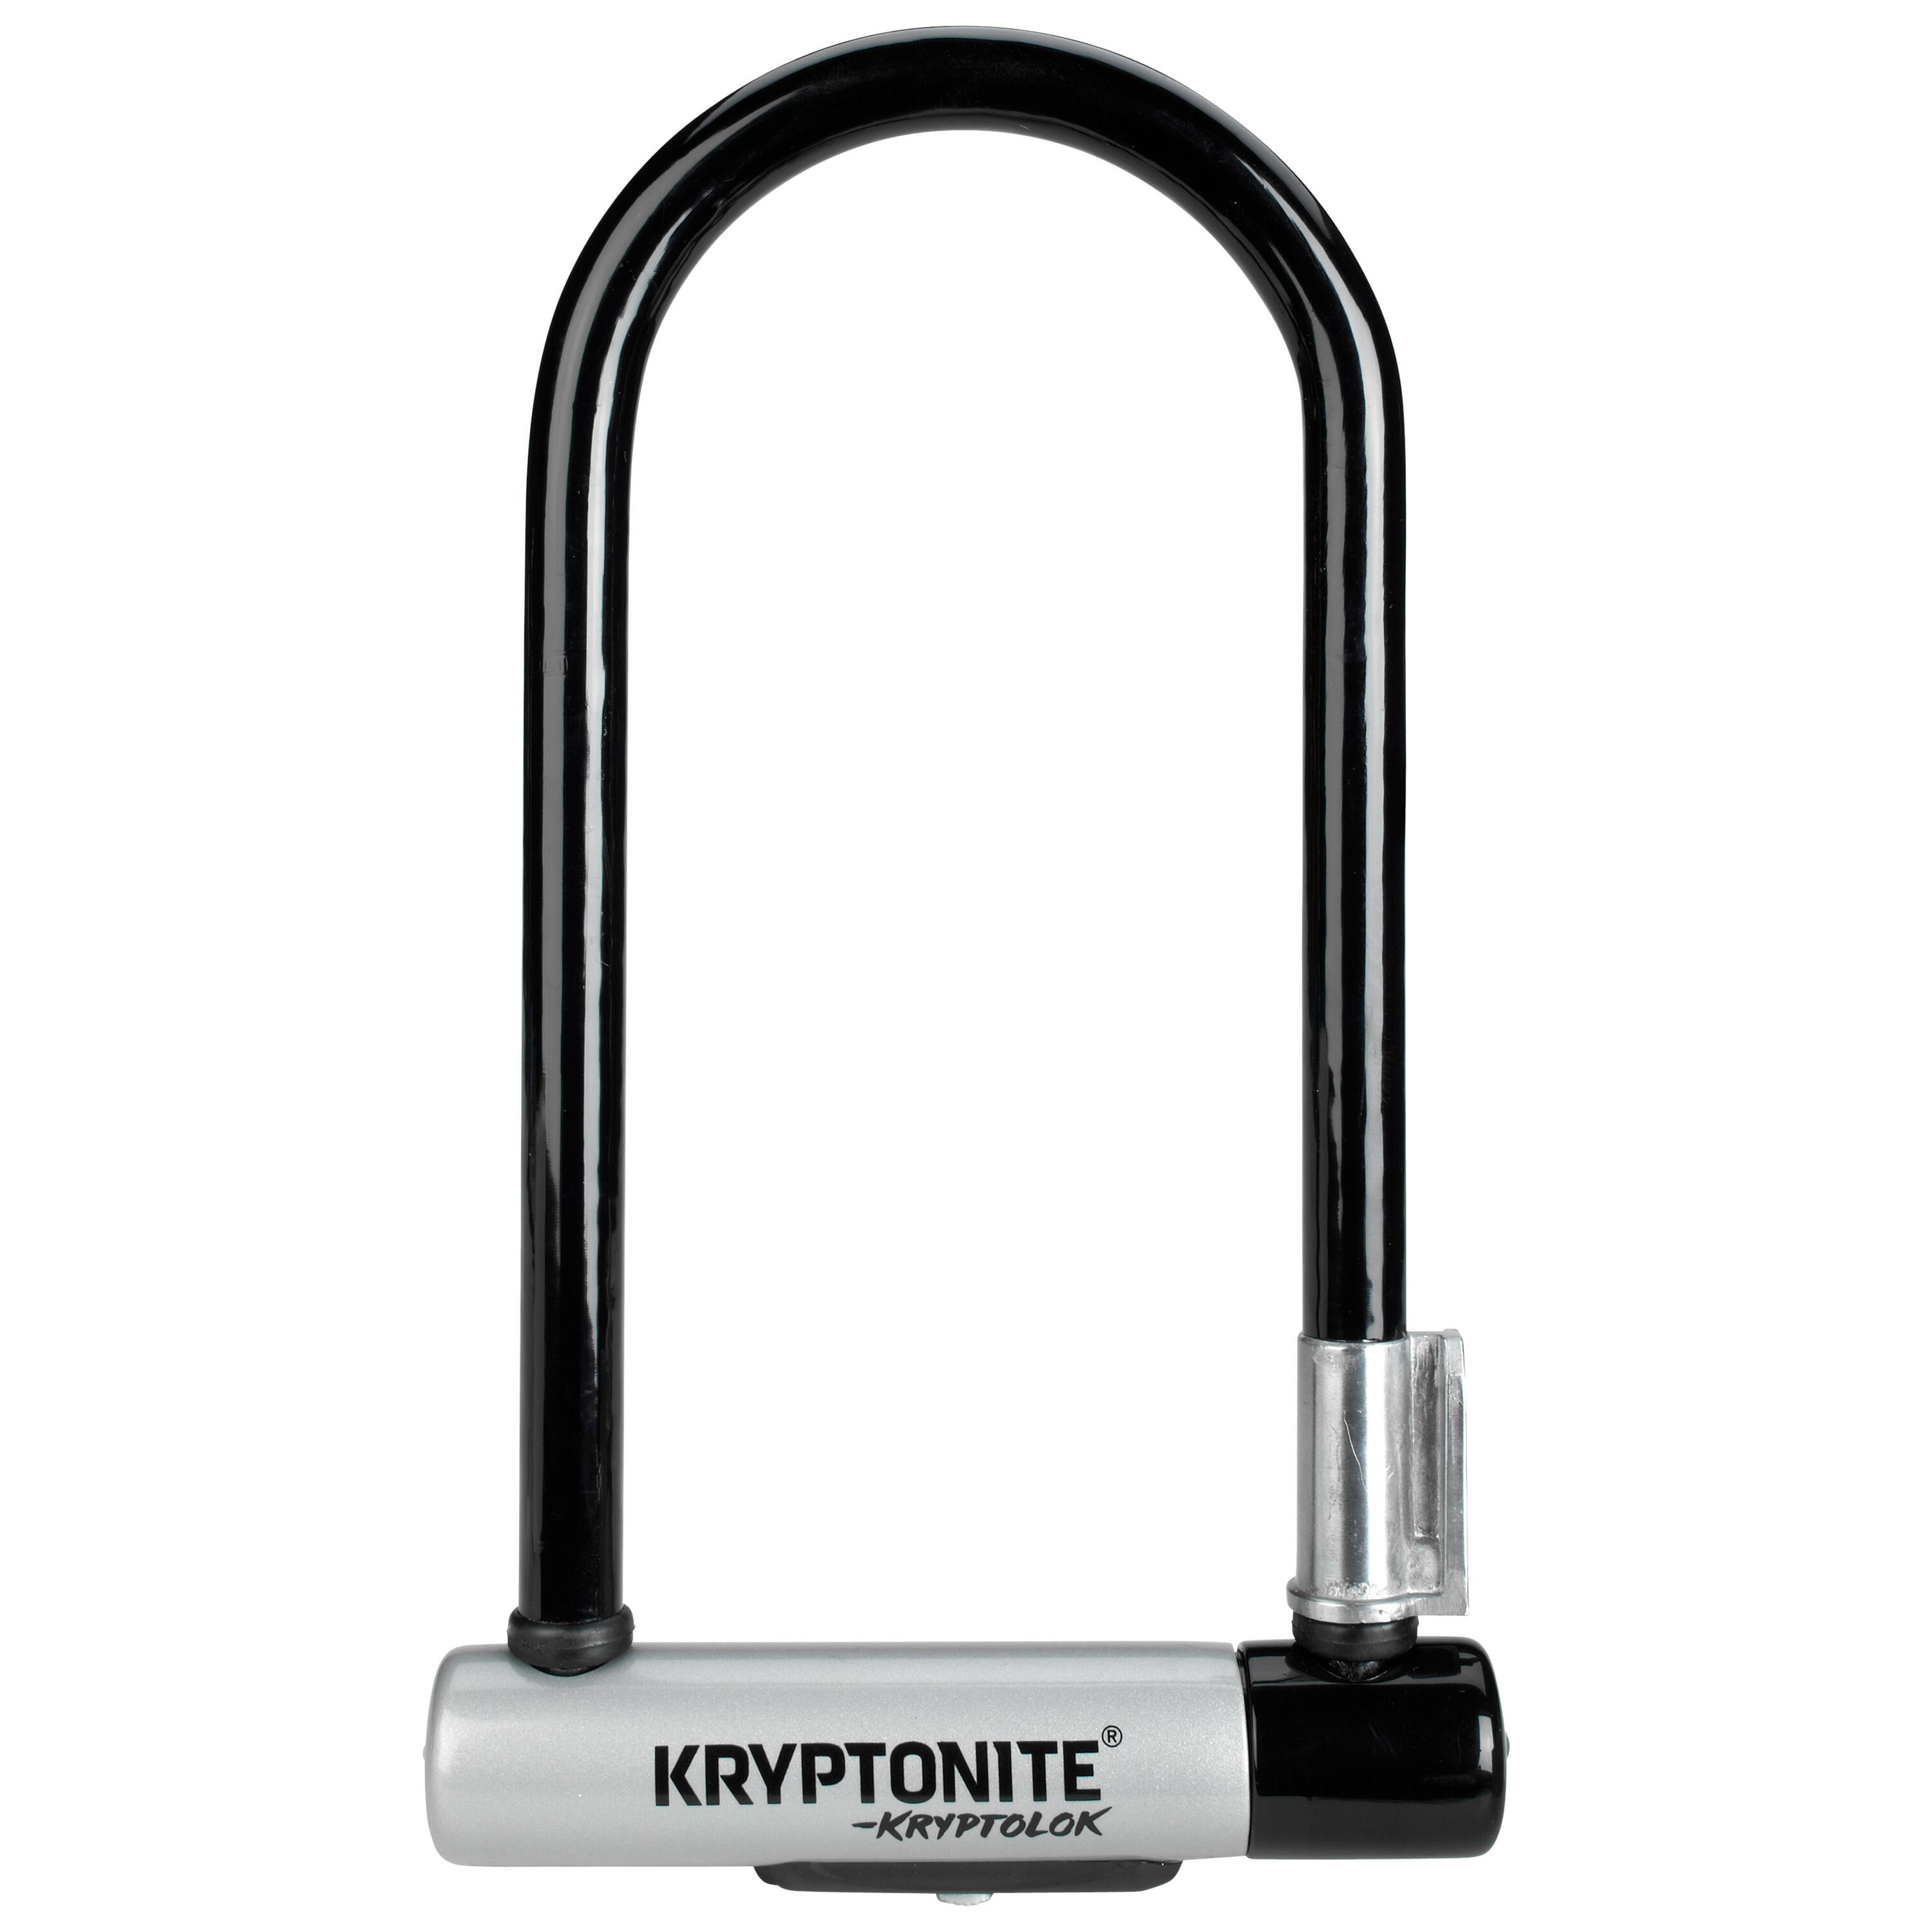 KRYPTONITE Kryptonite Kryptolok Standard U-Lock with Flexframe bracket